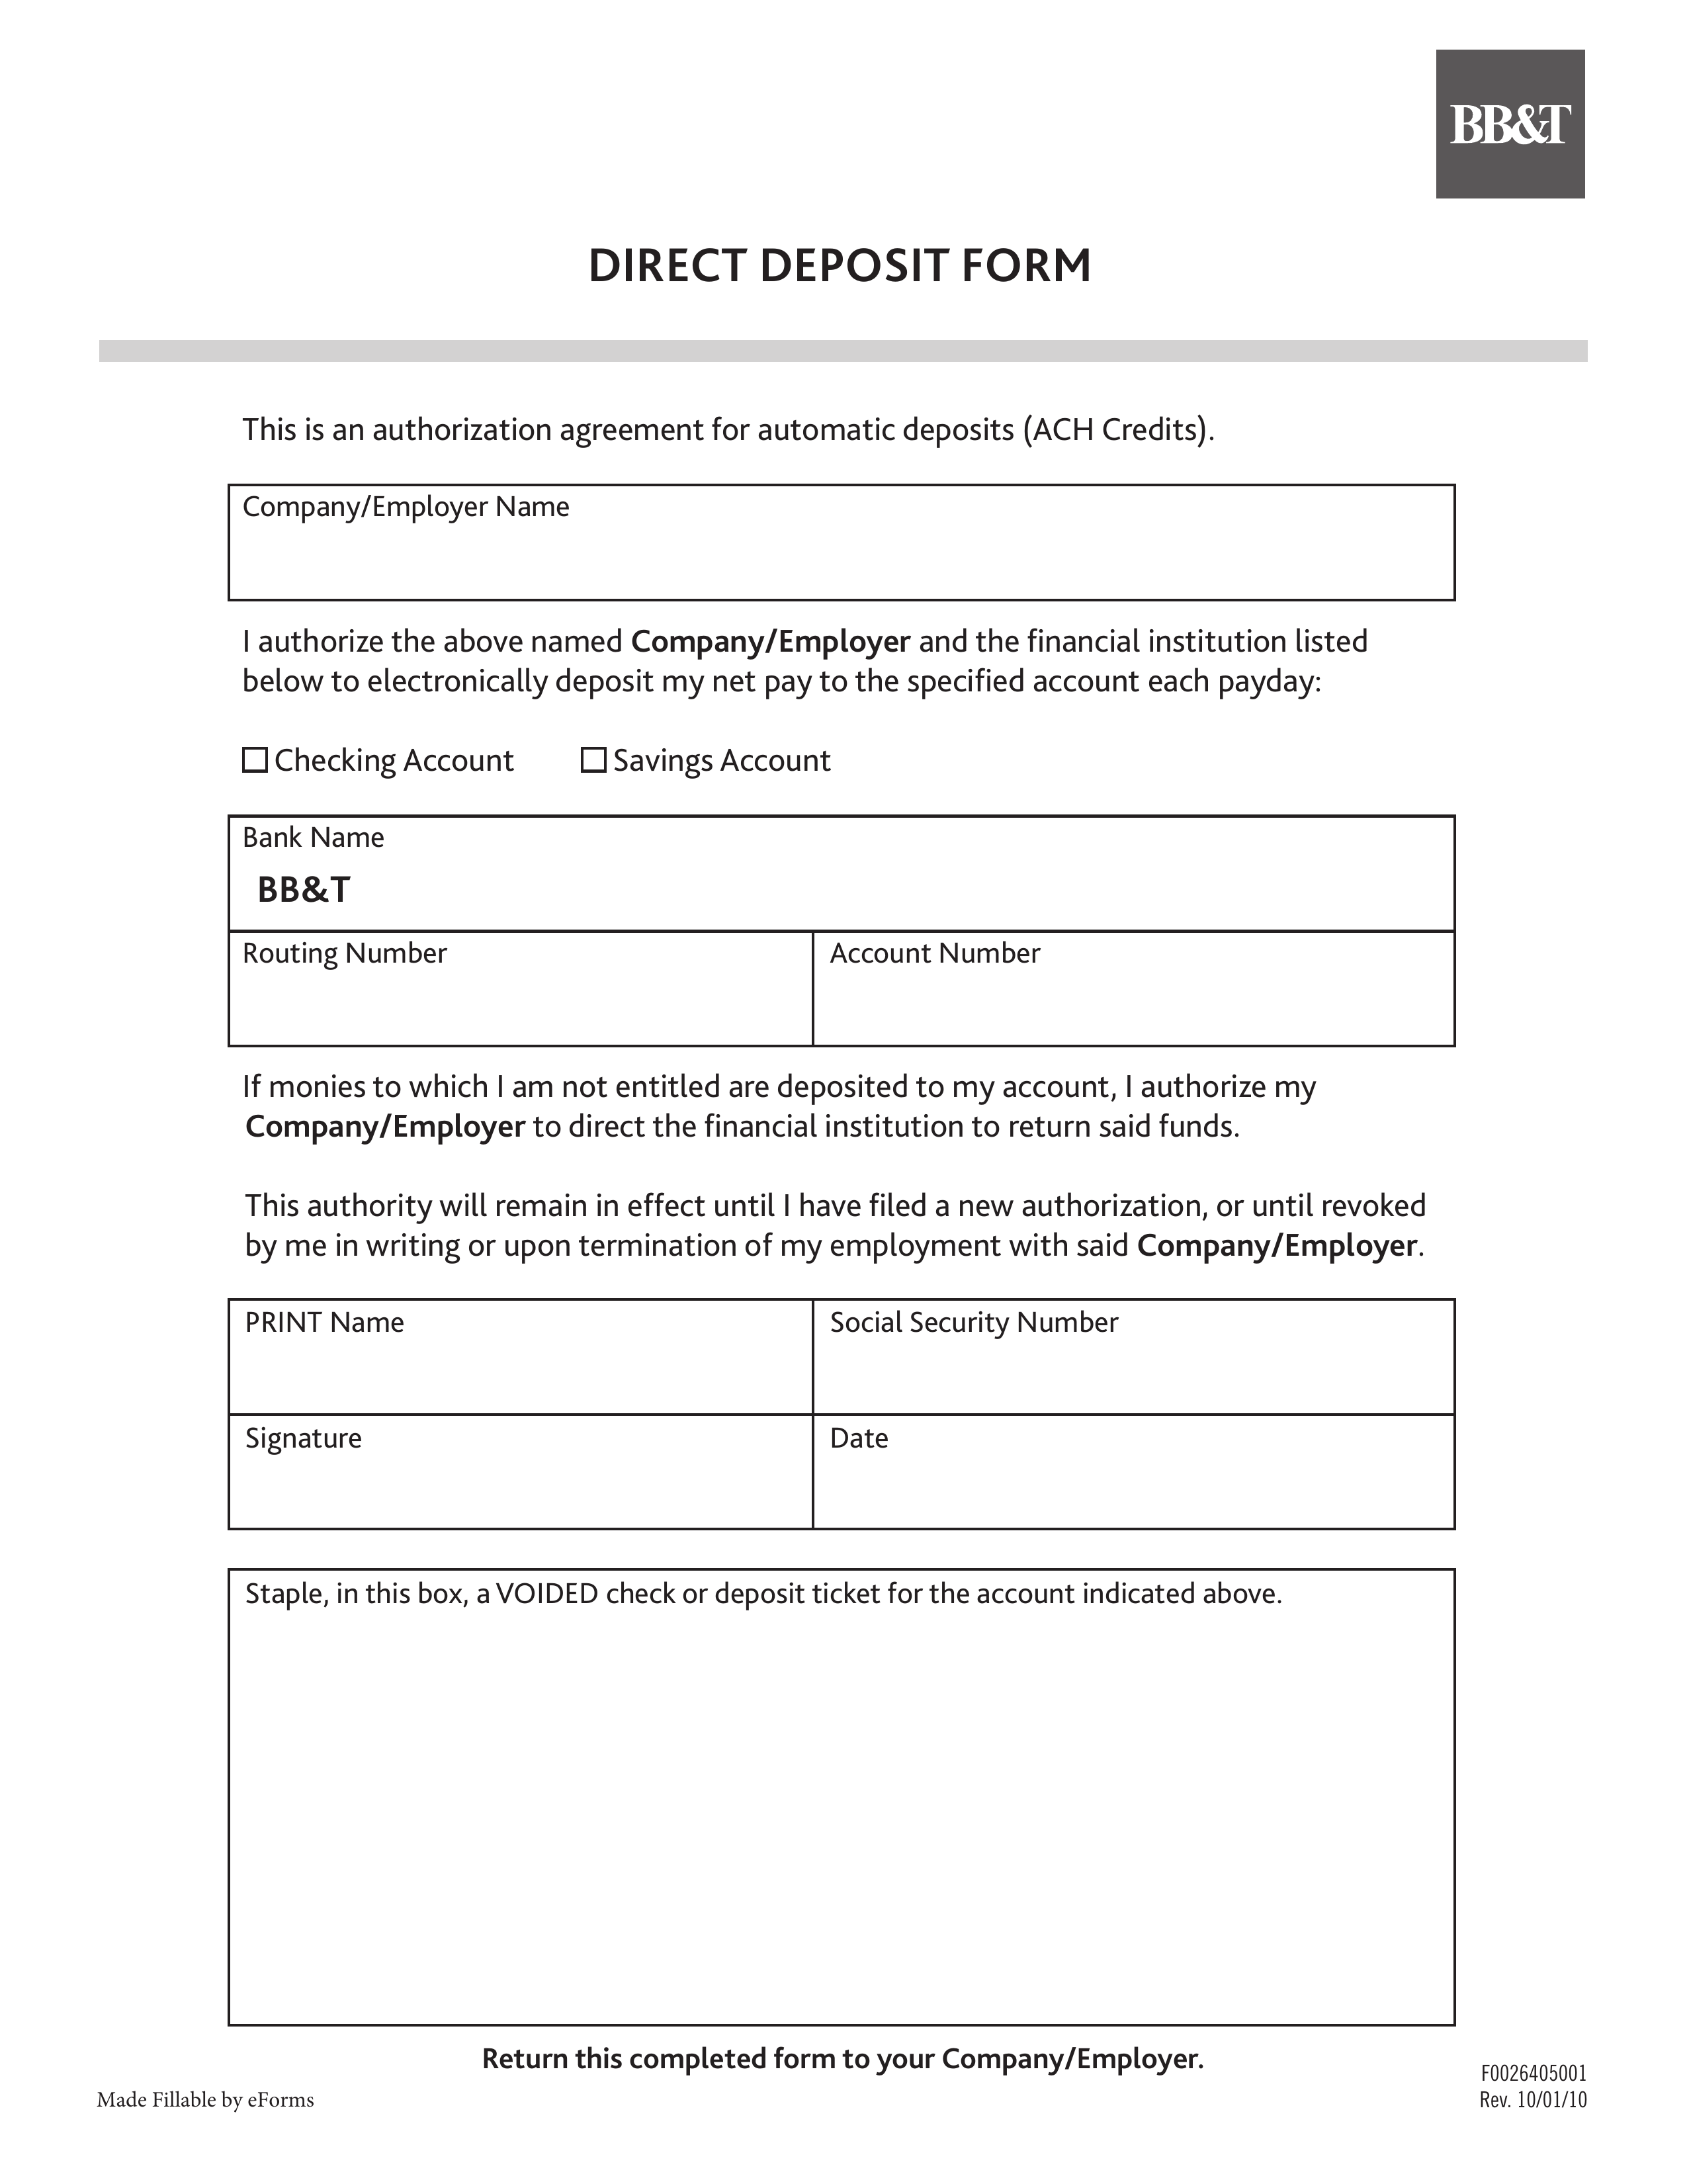 Free BB&T Direct Deposit Authorization Form – PDF – EForms With Direct Deposit Authorization Form Template